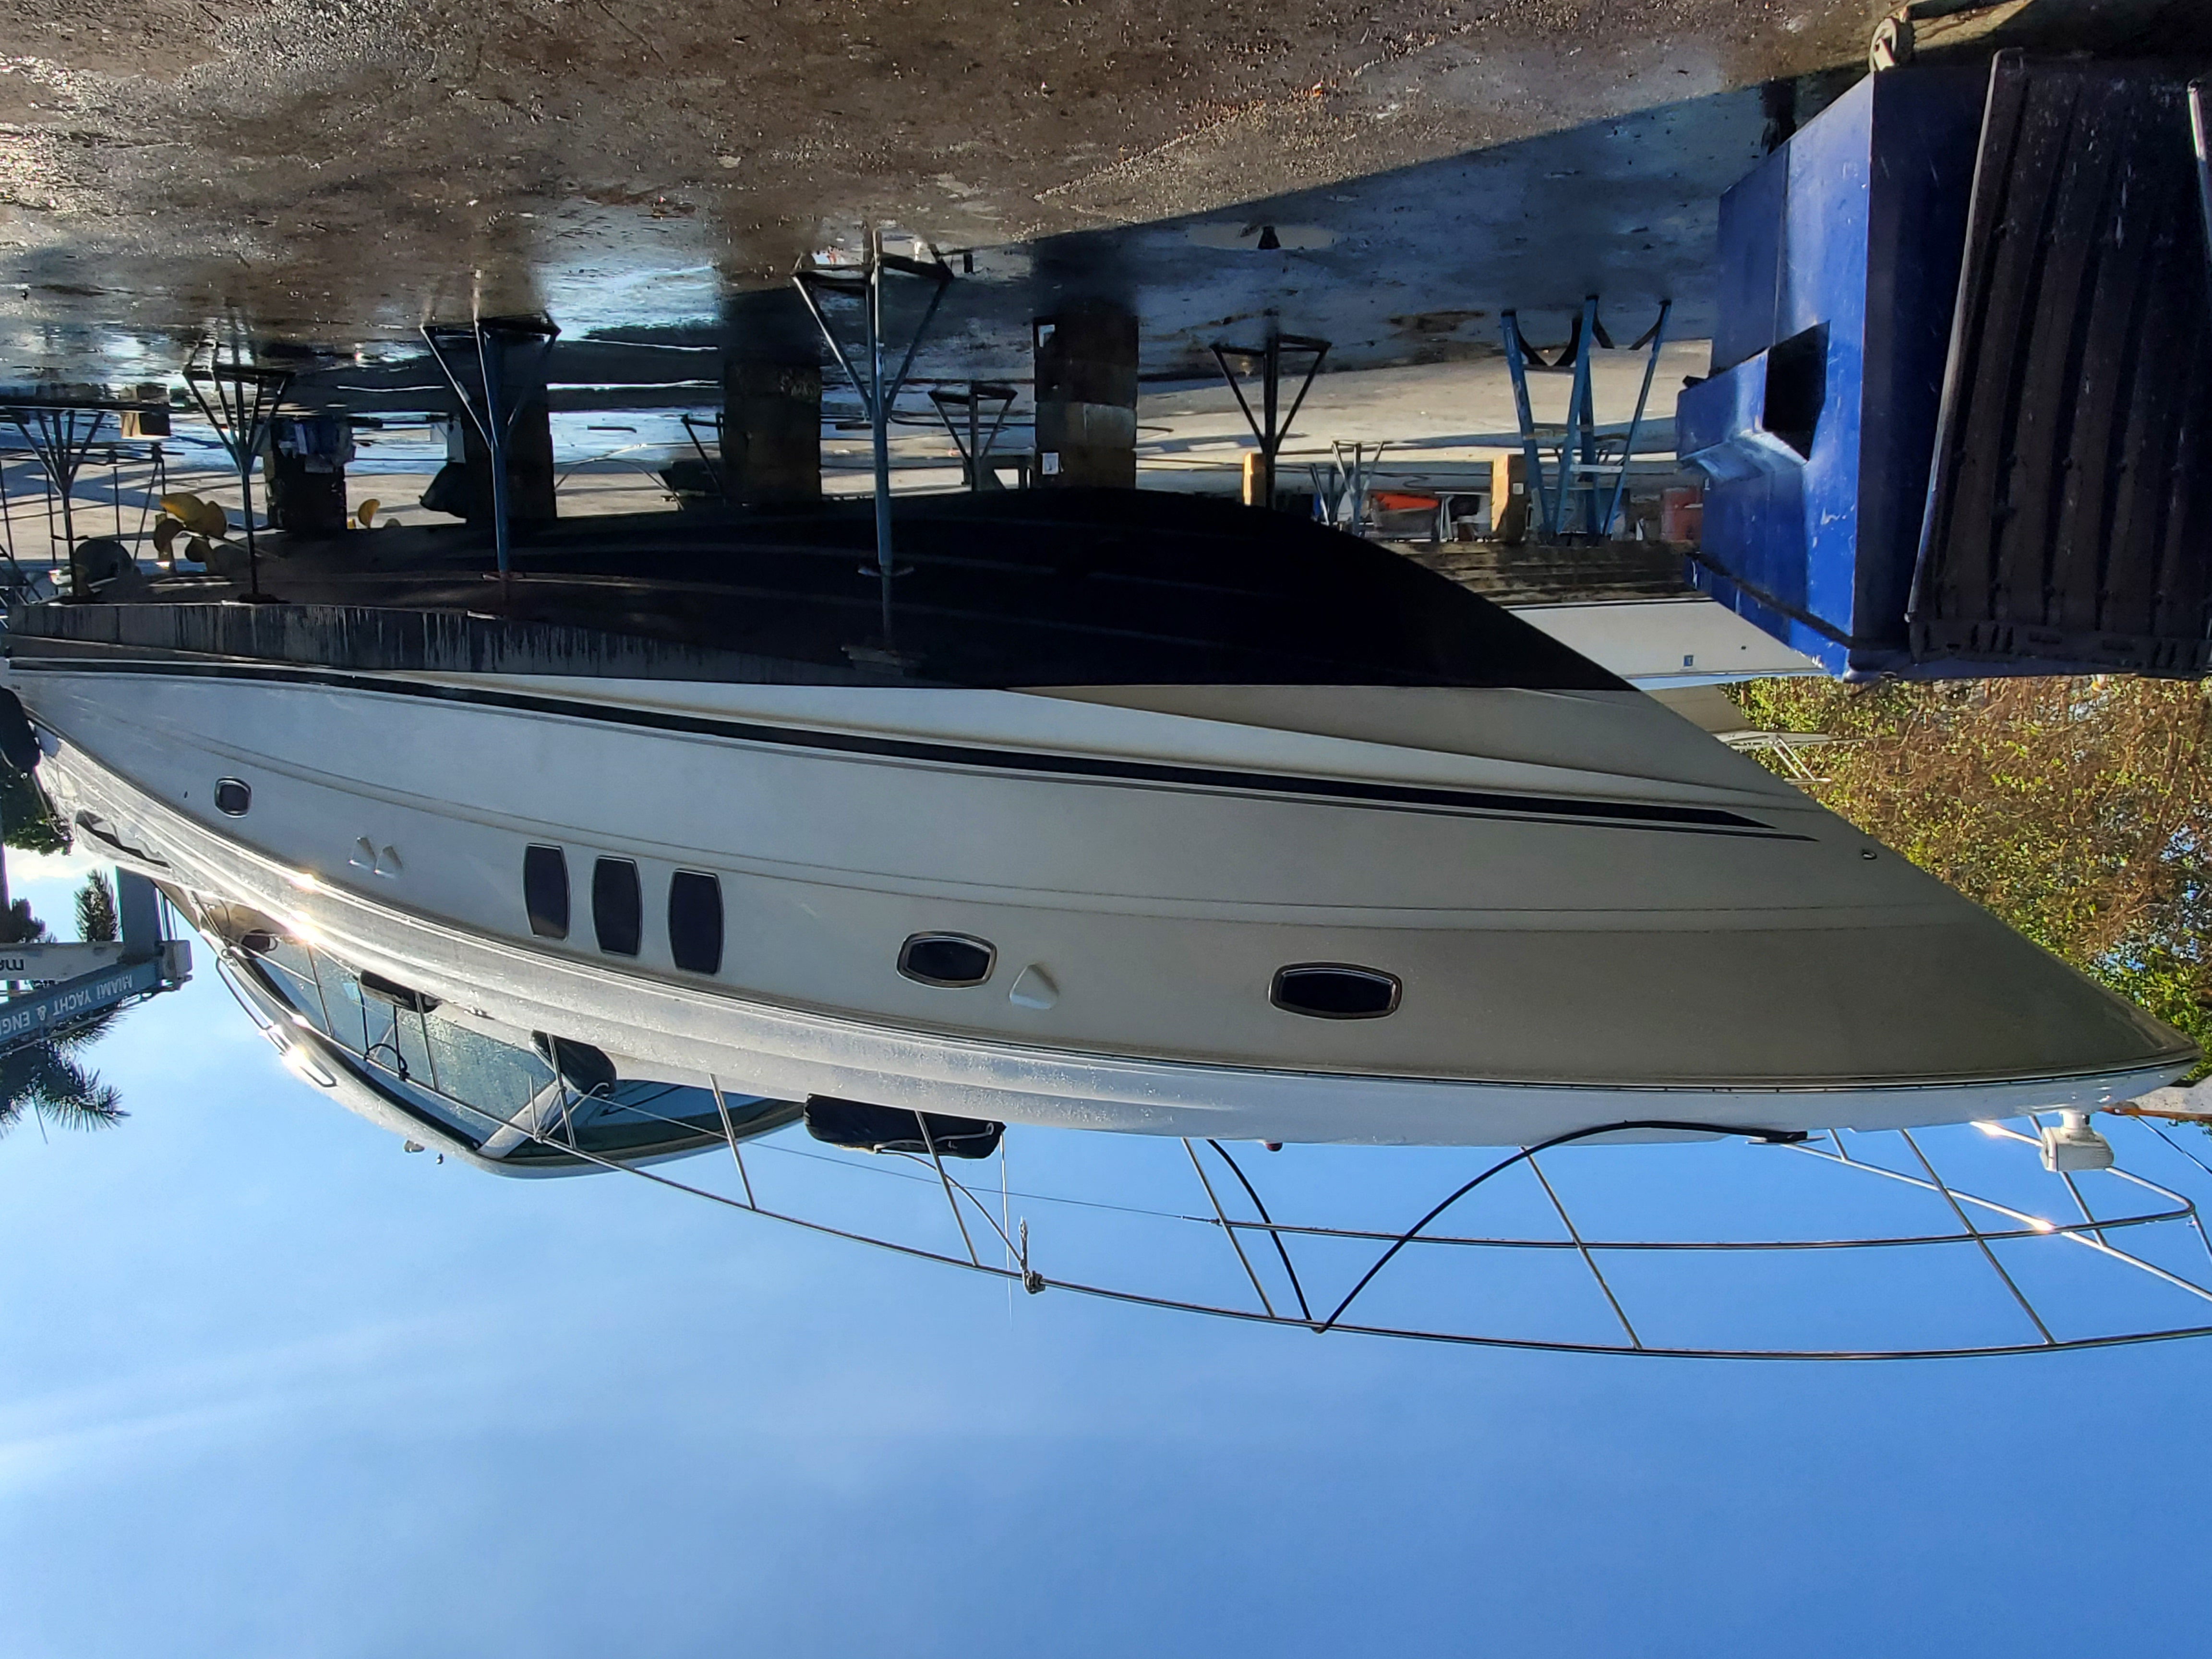 2006 51 foot Sea Ray Sundancer  Power boat for sale in Hallandale Beach, FL - image 1 